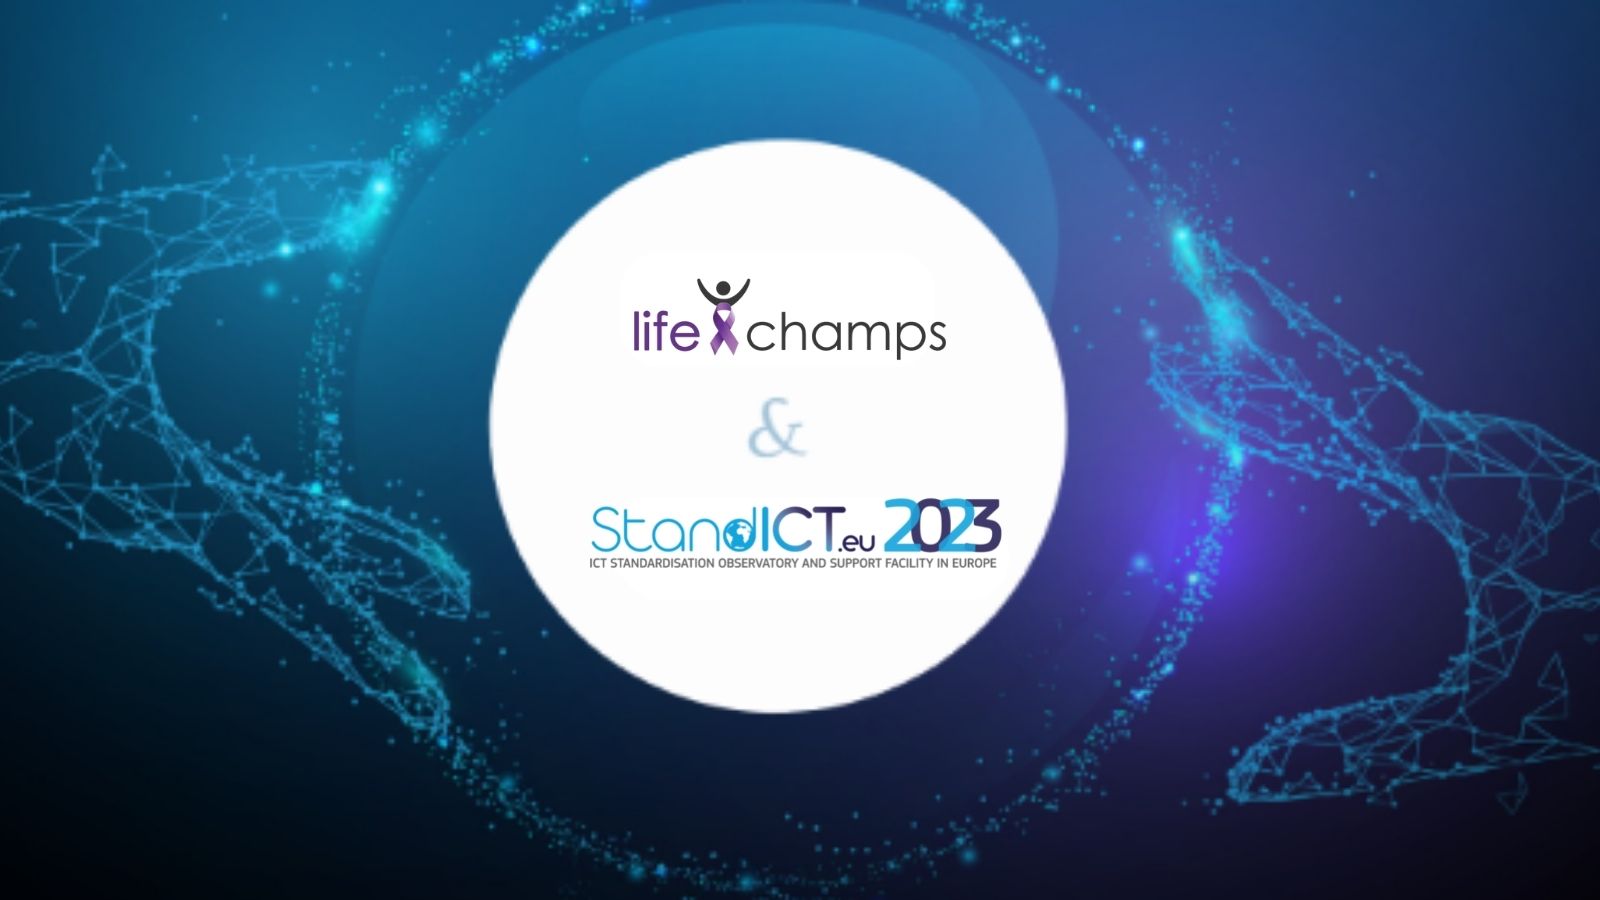 Press Release StandICT.eu & LifeChamps MoU